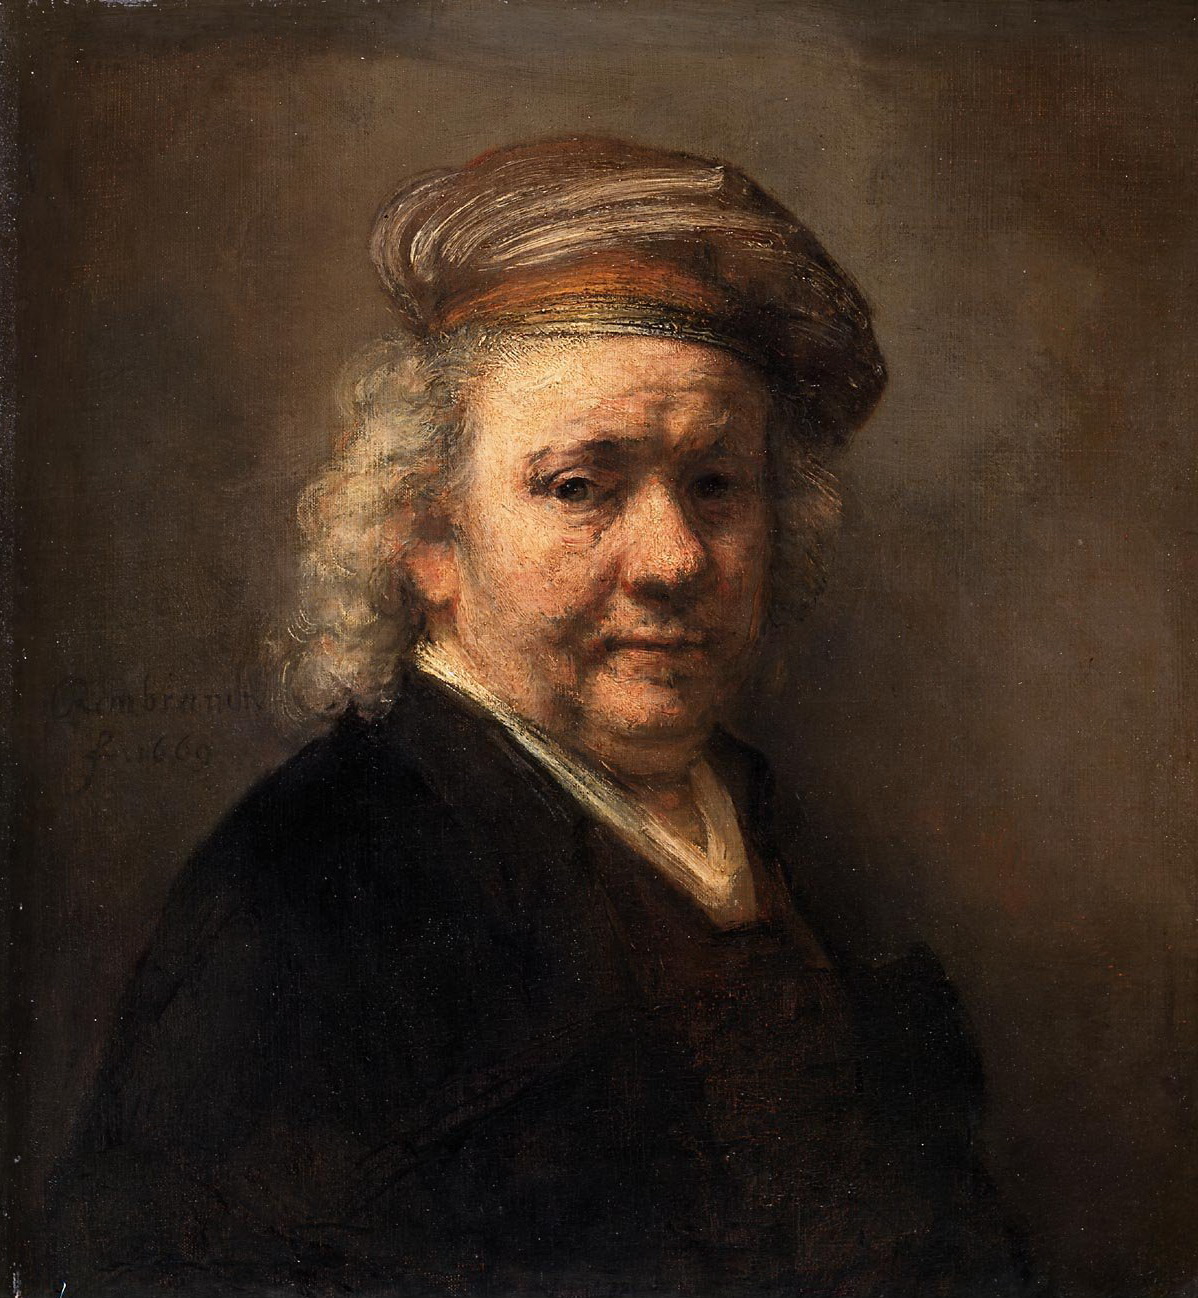 Рембрандт ван Рейн. "Автопортрет". 1669.